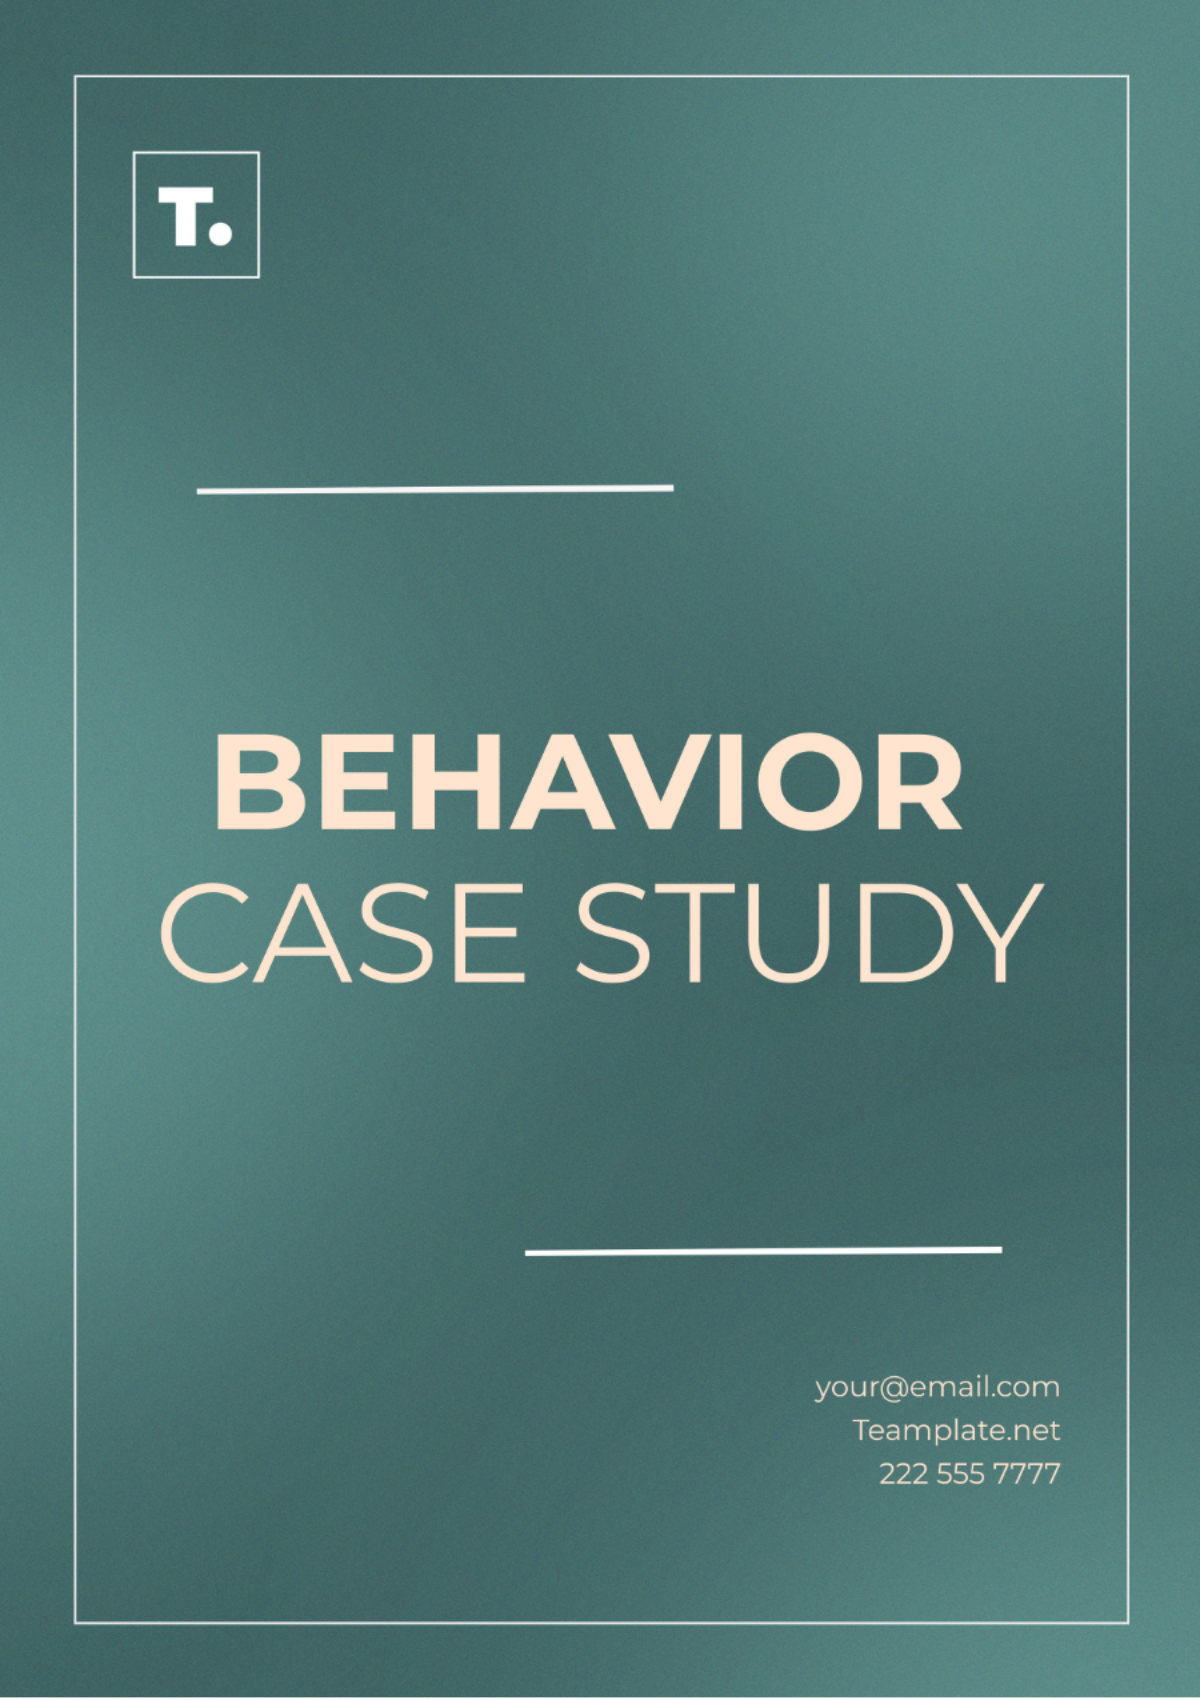 Behavior Case Study Template